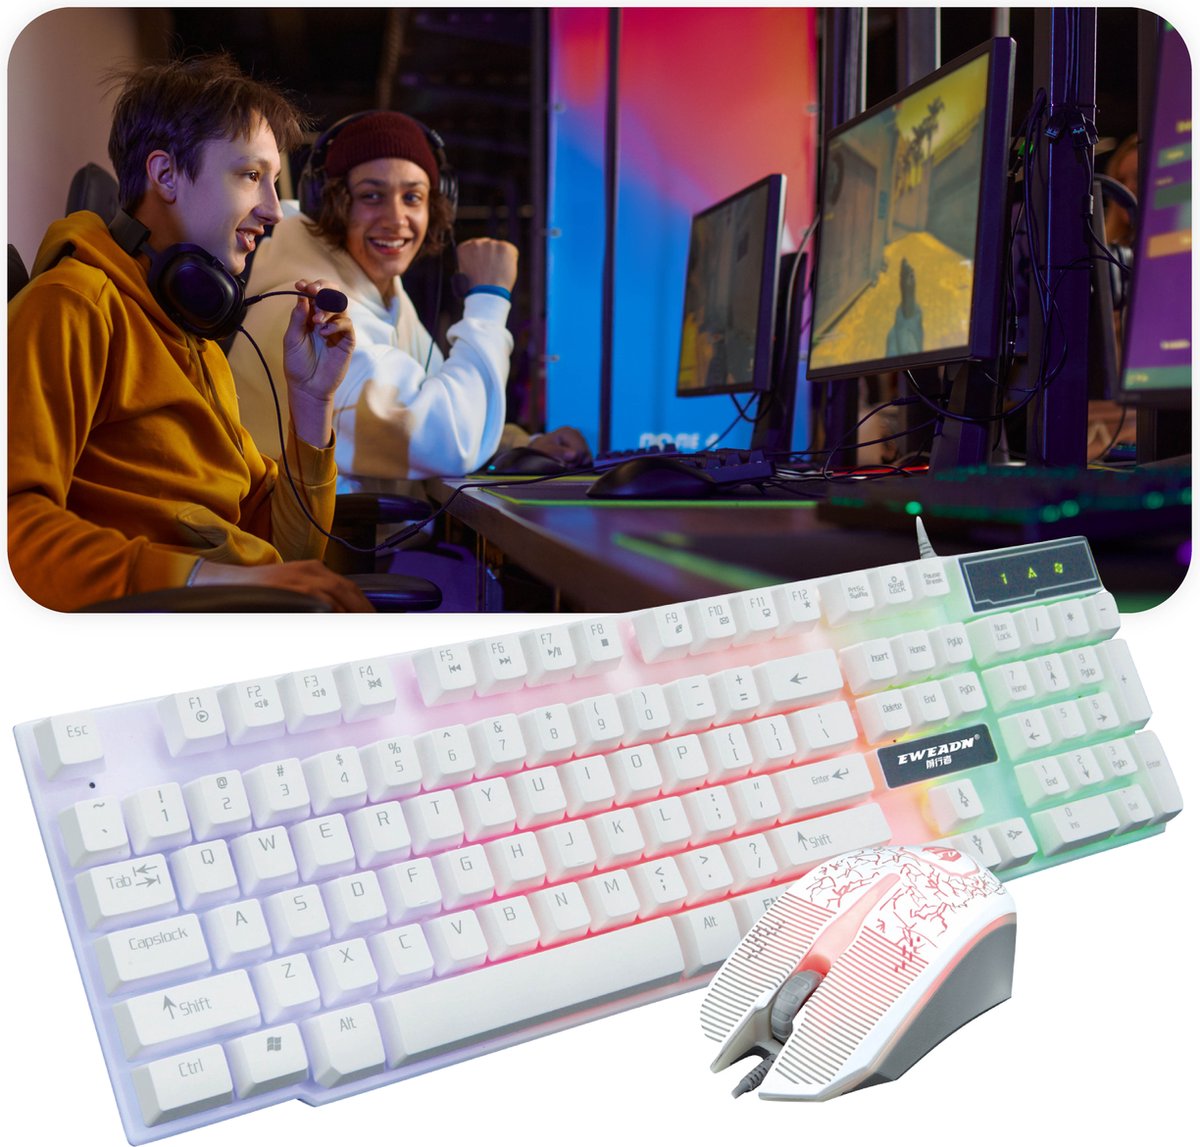 Voltano Gaming Keyboard en muis - USB - Led verlichting - Wit